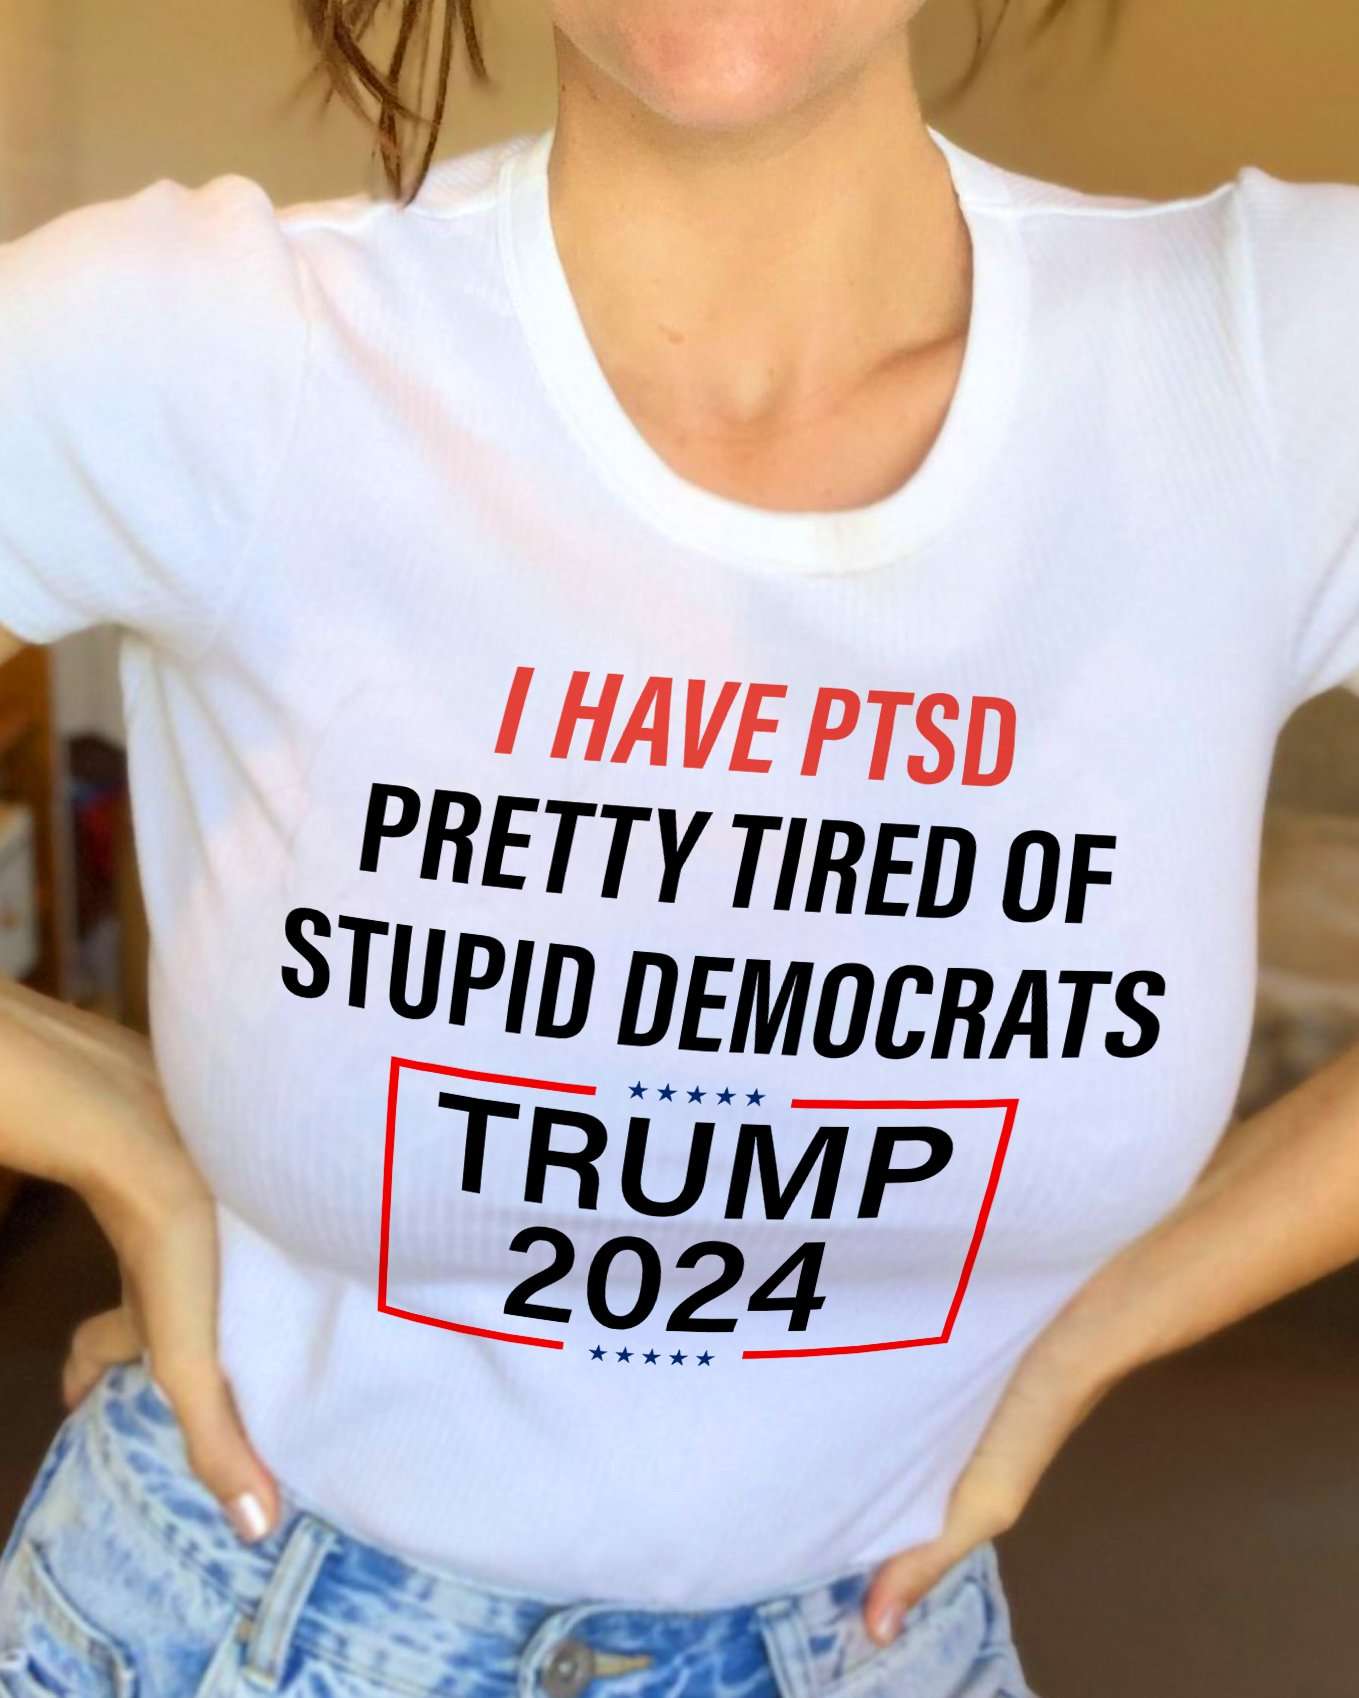 I have PTSD pretty tired of stupid democrats - Trump 2024, Donald Trump